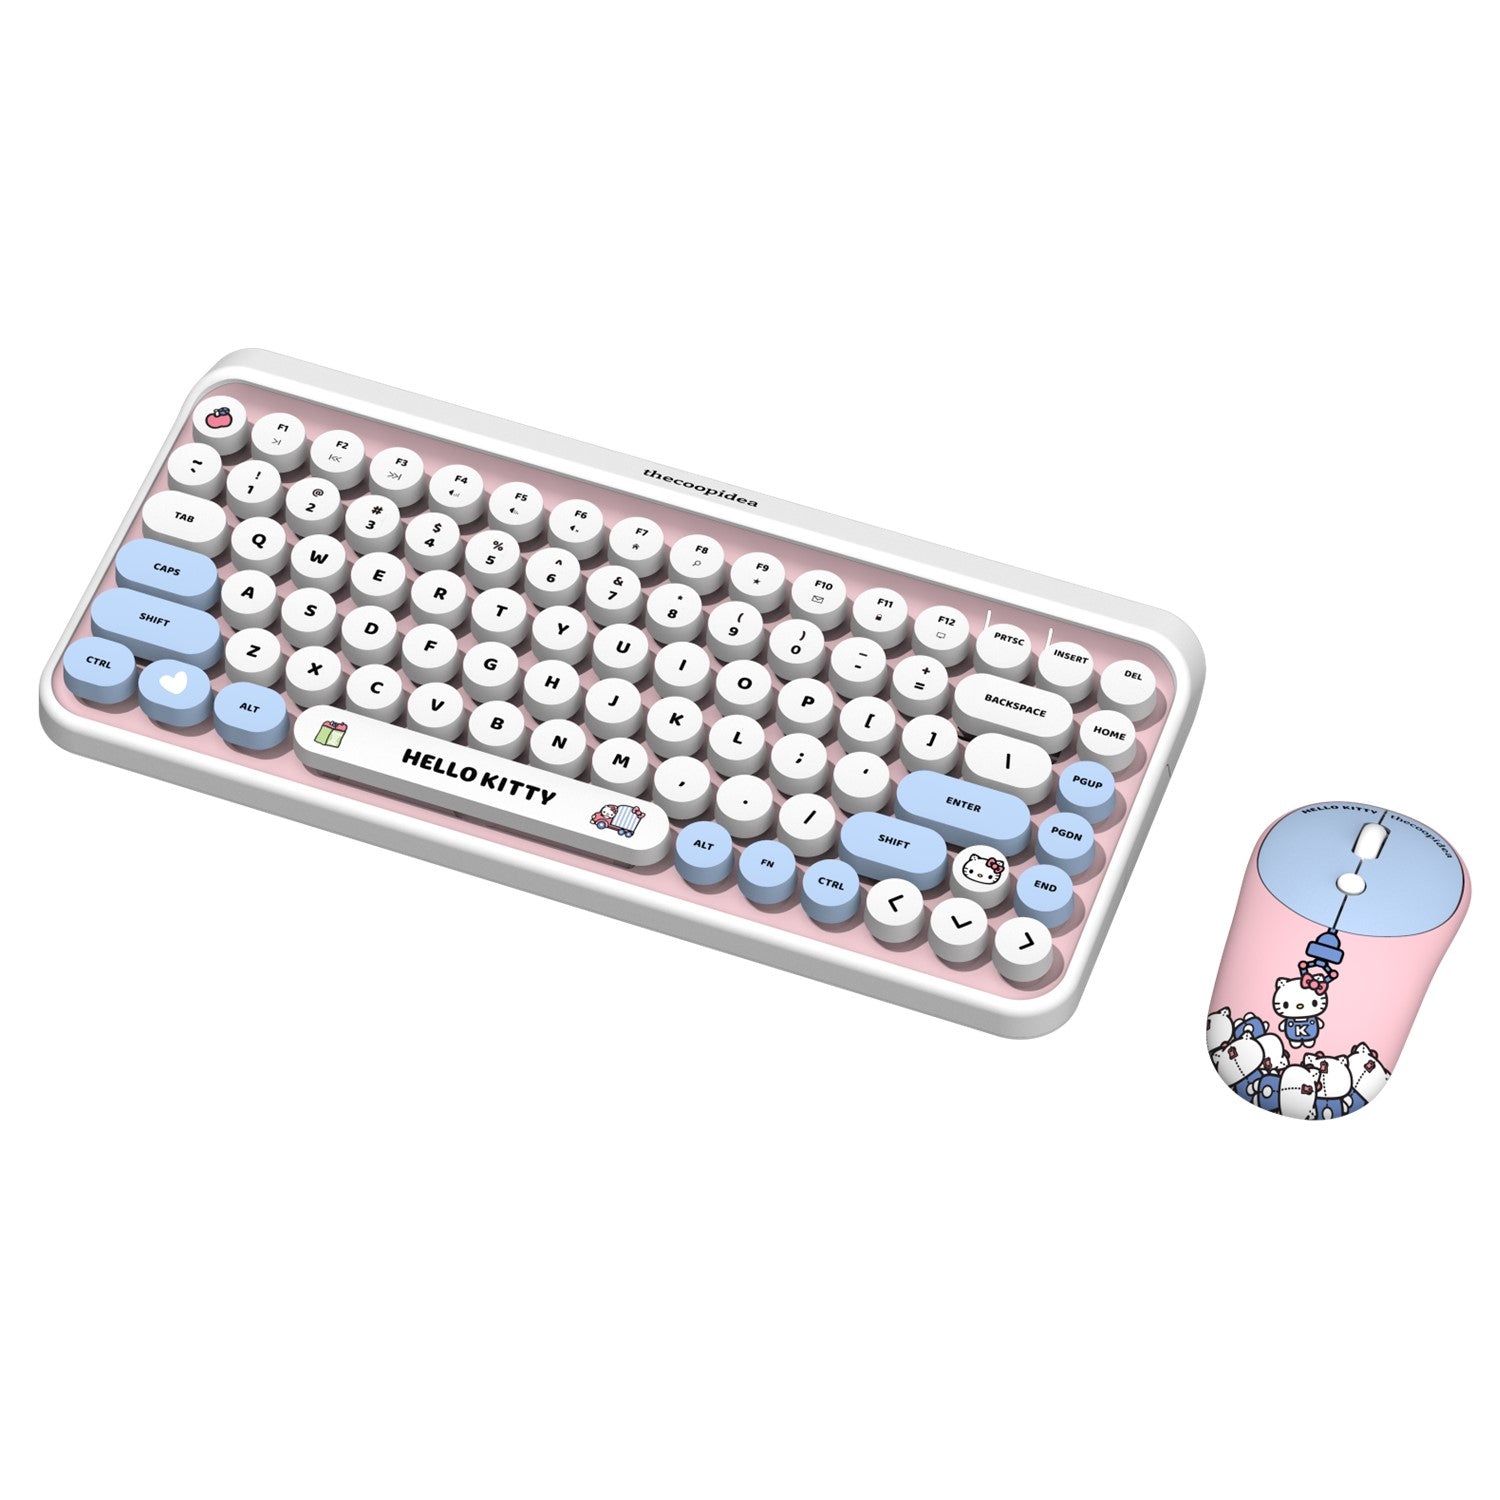 Thecoopidea Sanrio Tappy Wireless Keyboard & Mouse Set